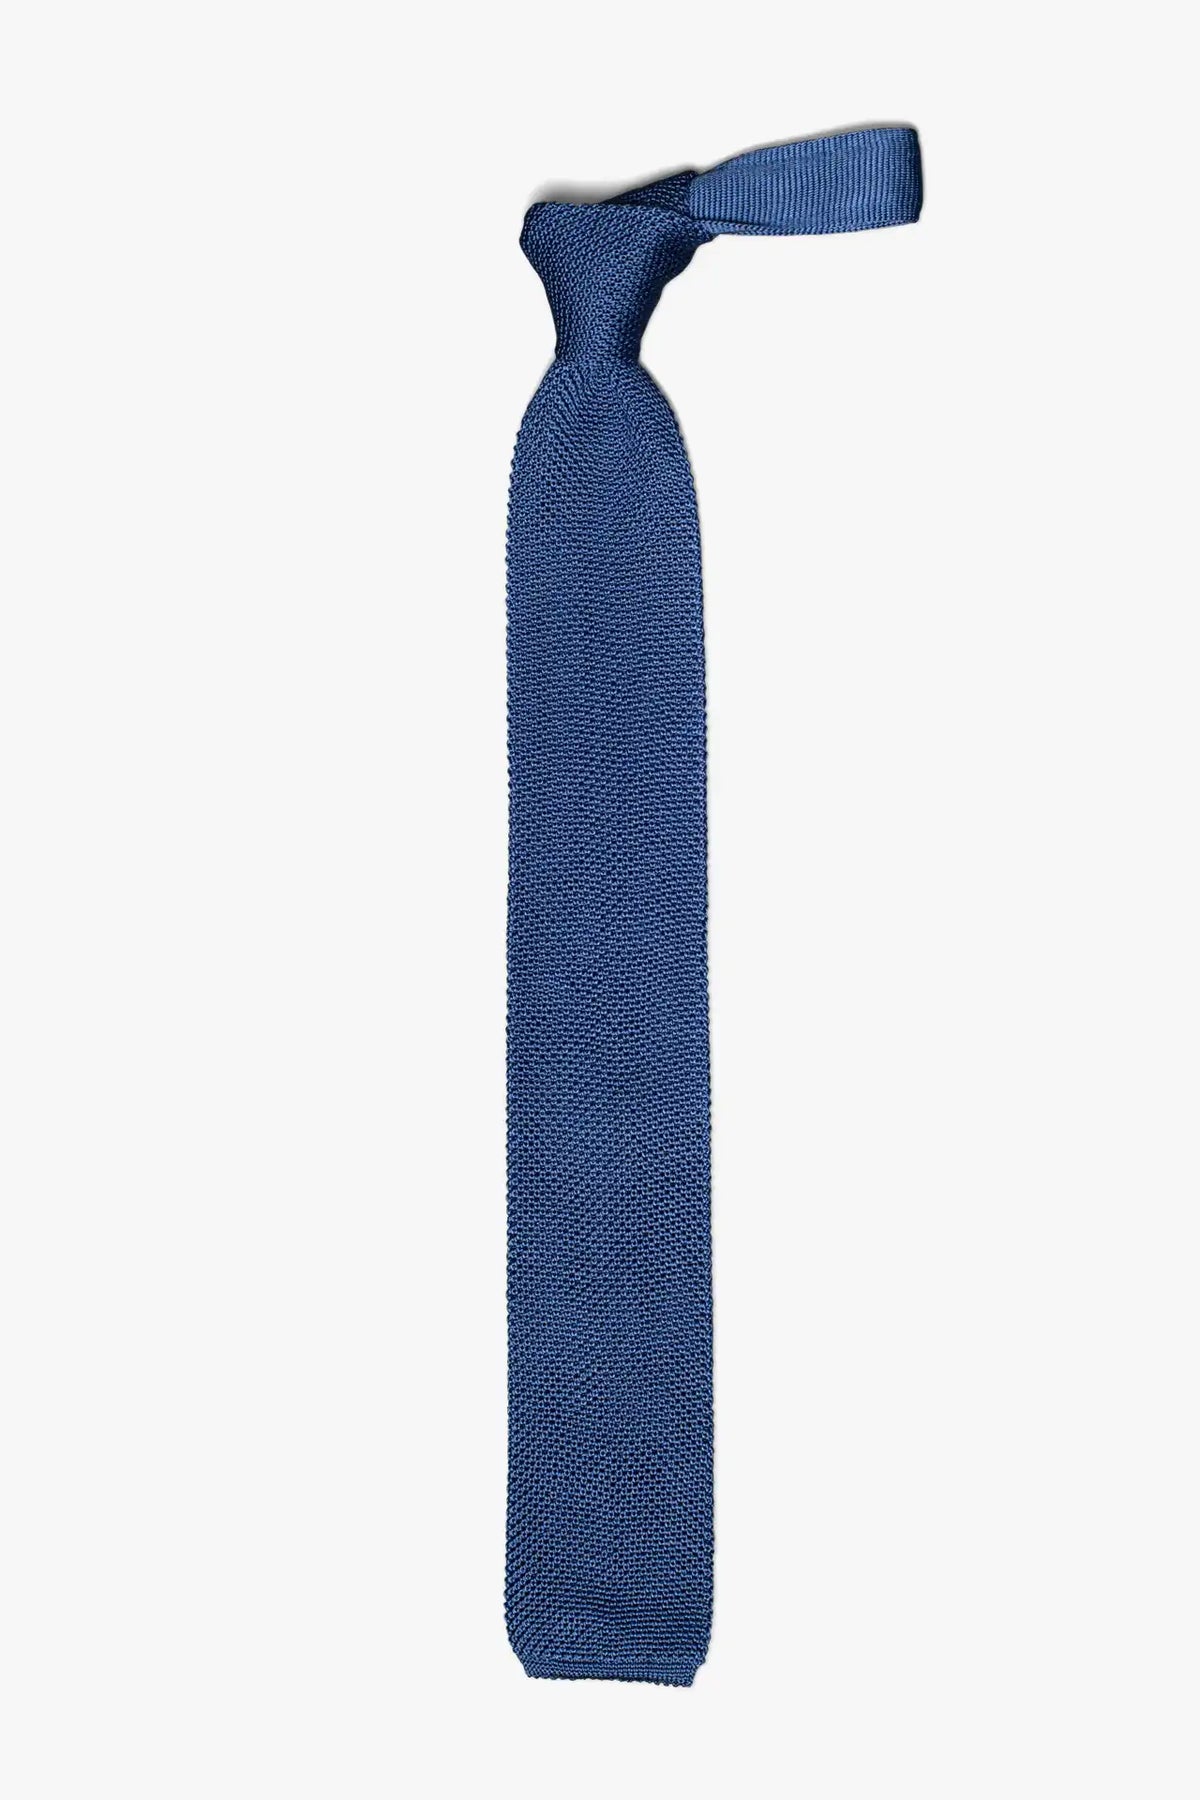 Silk knitted Tie - Ocean blue